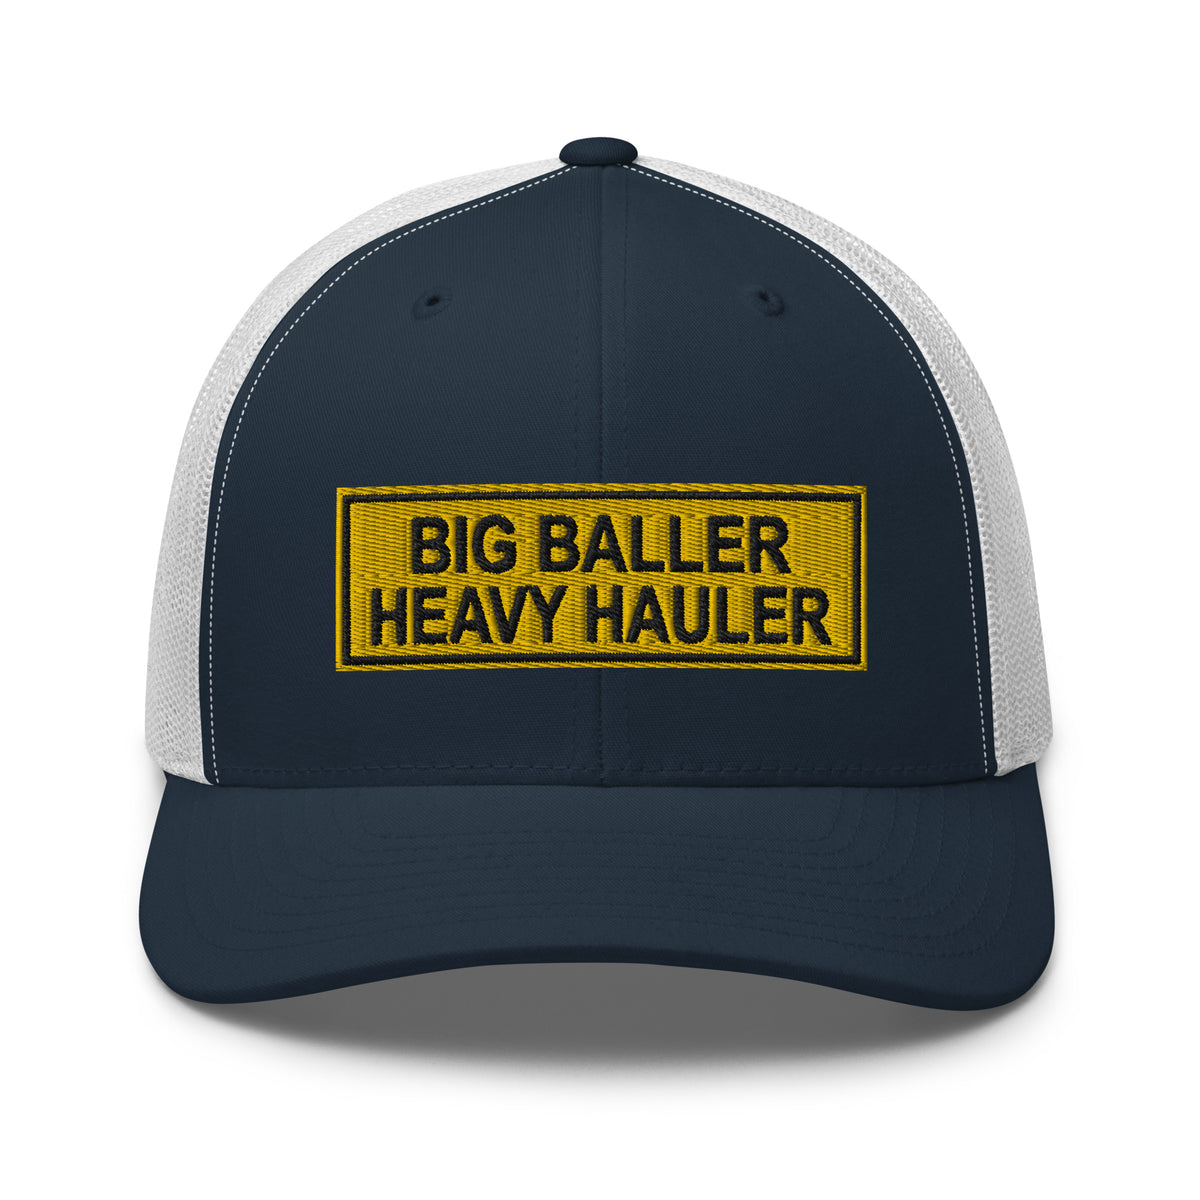 Big Baller Heavy Hauler - Snapback Hat - Free Shipping